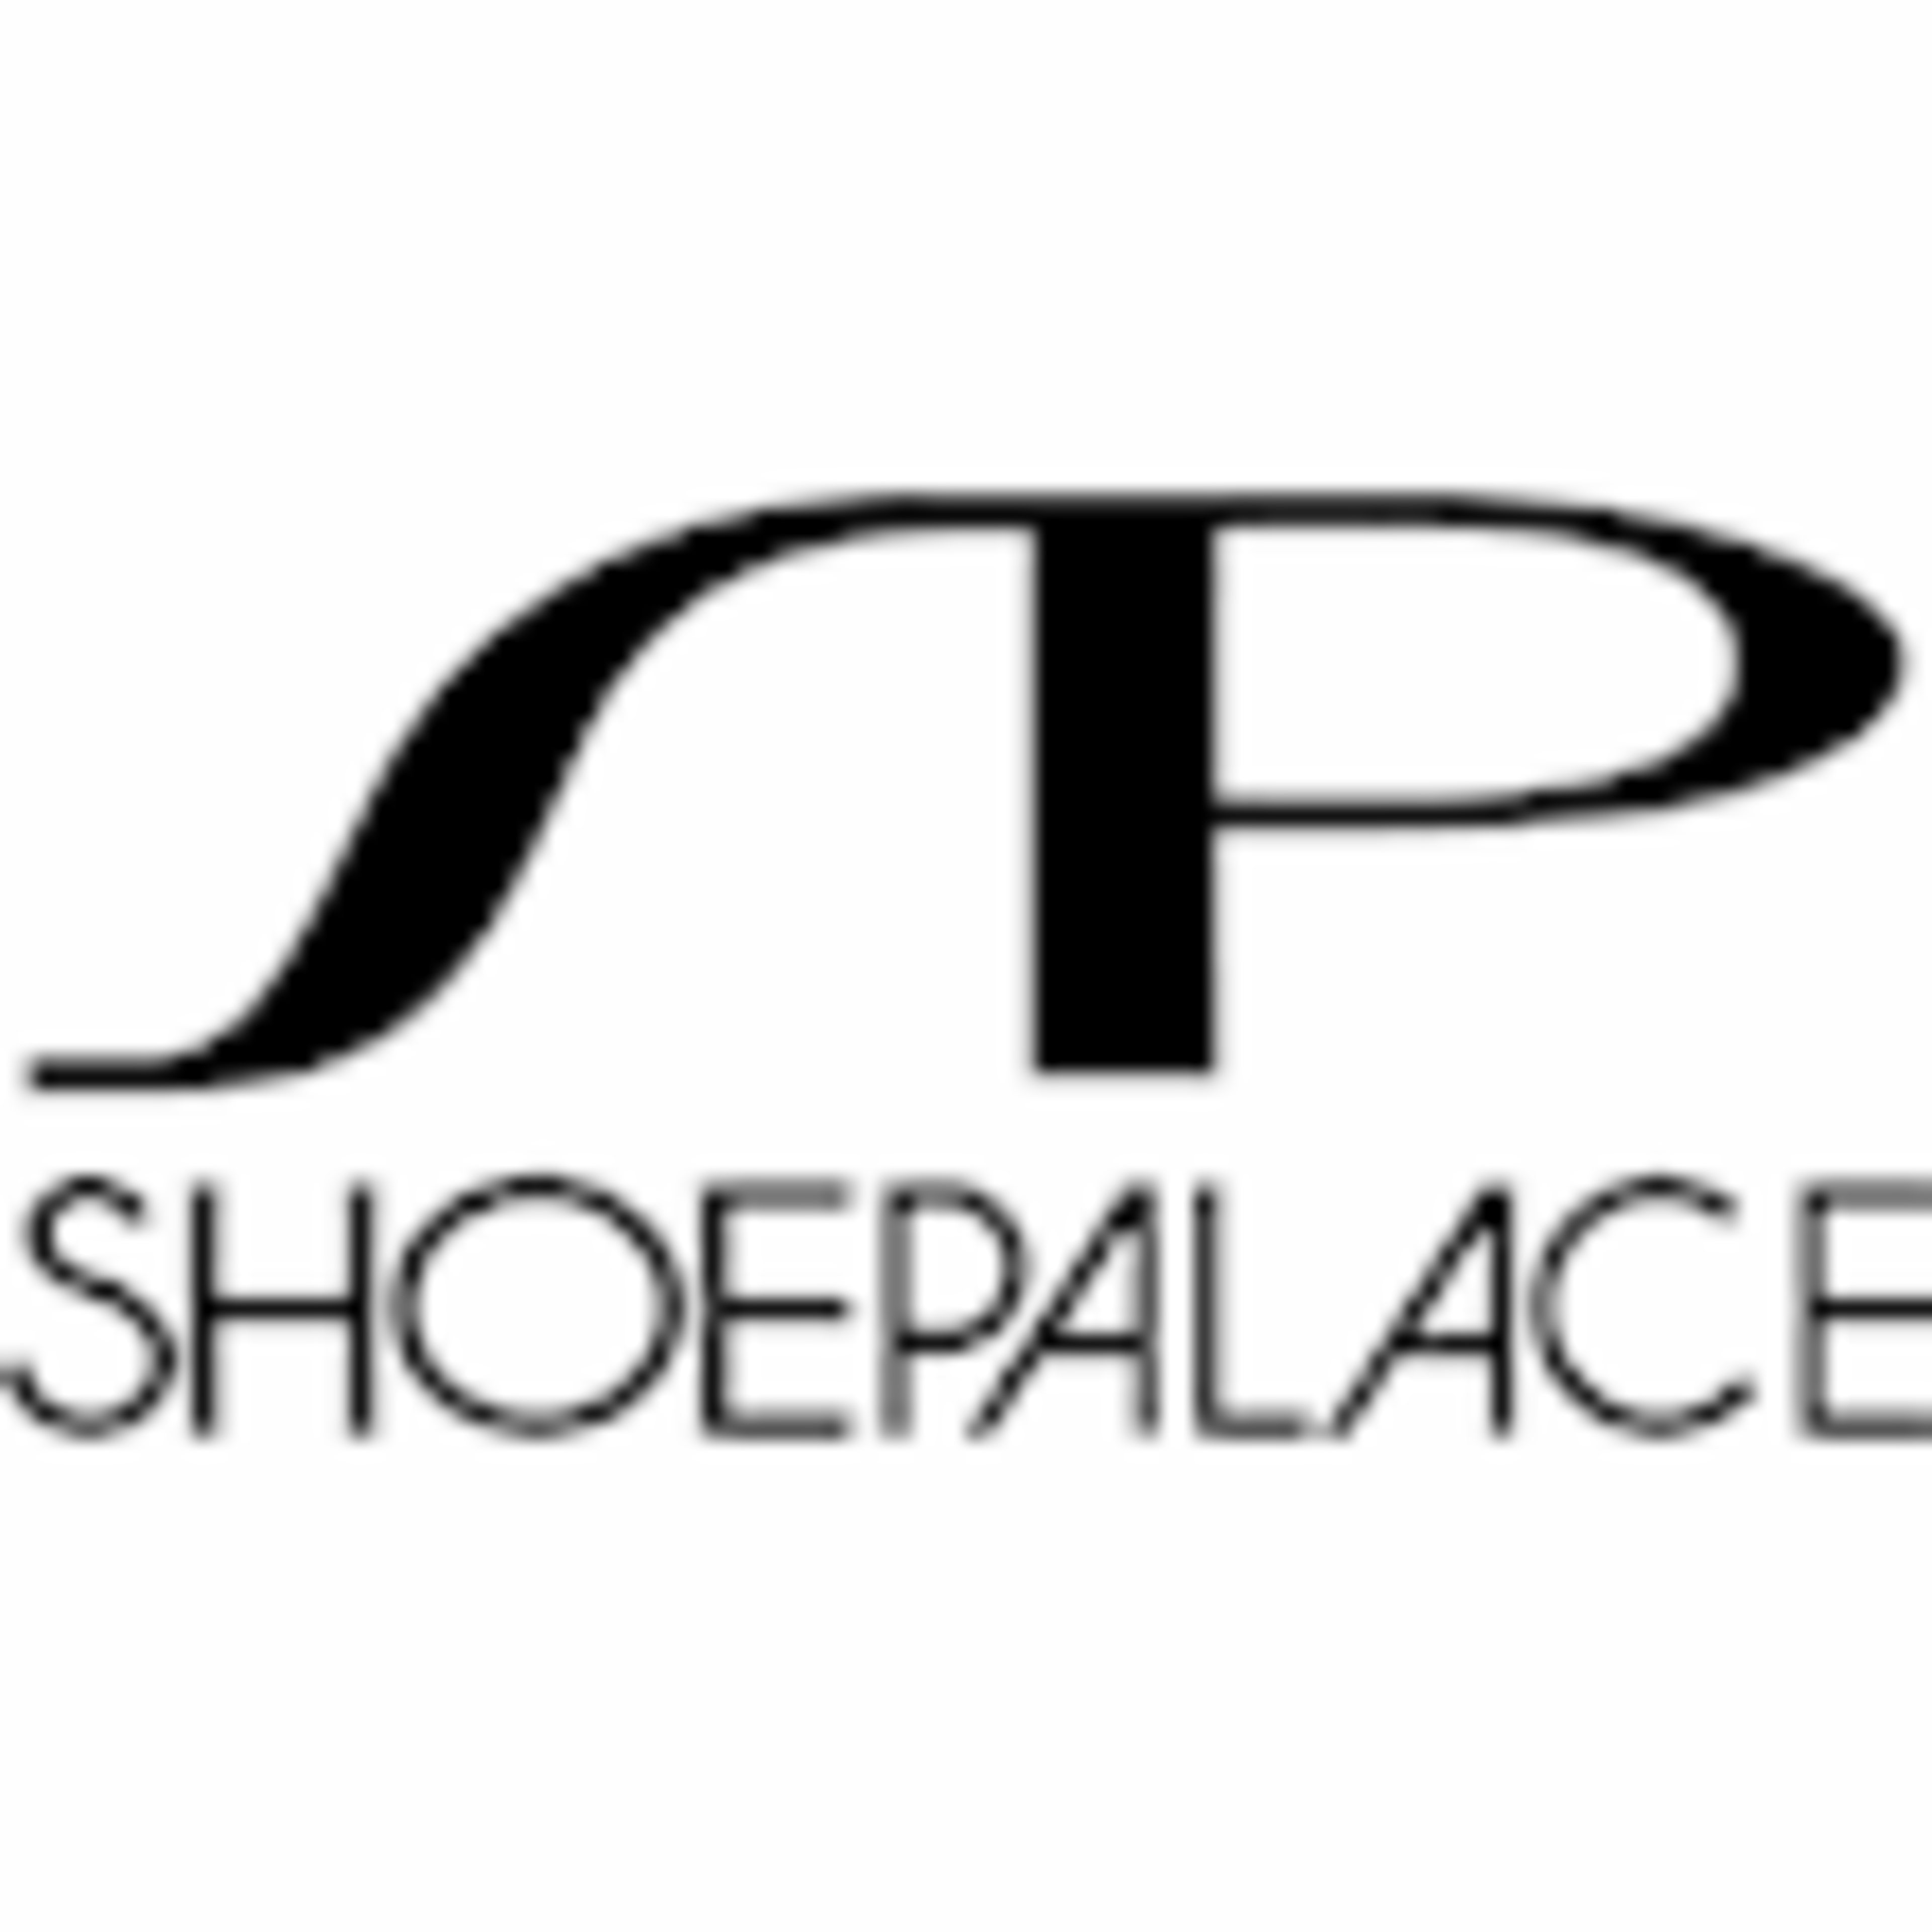 Shoe Palace Code